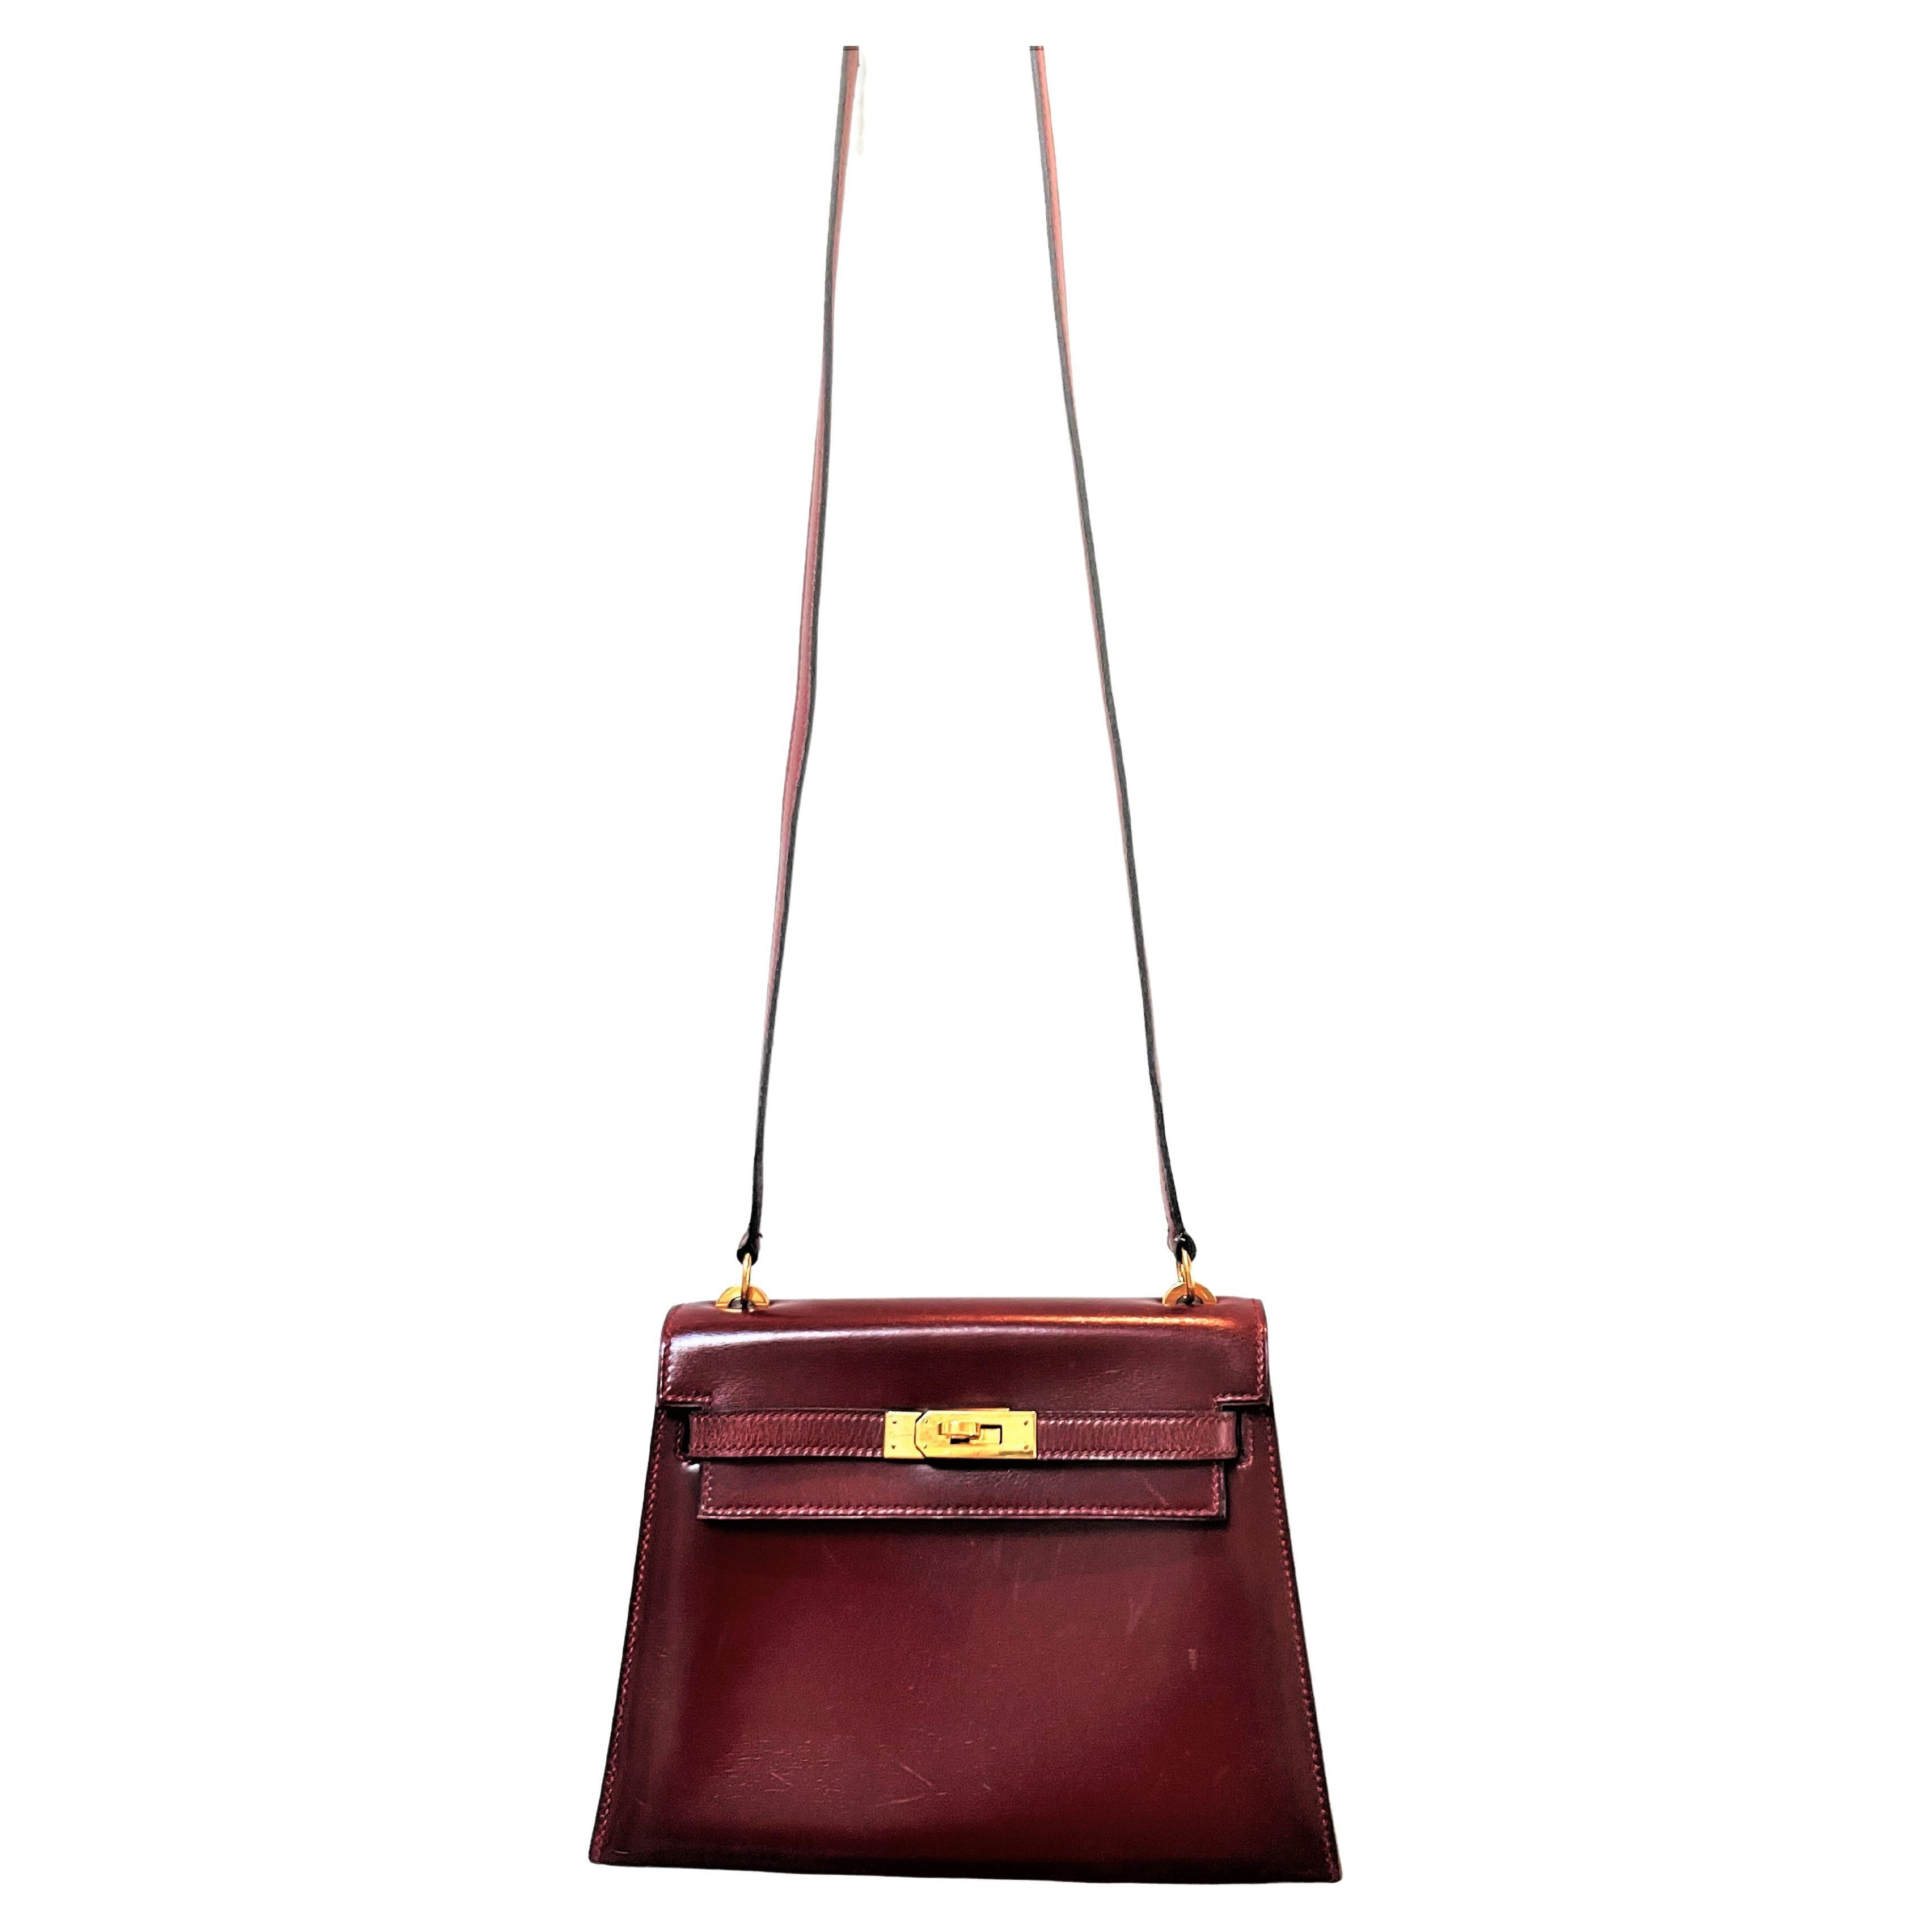 HERMÉS KELLY 20cm  bordeaux Calfskin Leather, gold hardware, small shoulder bag  For Sale